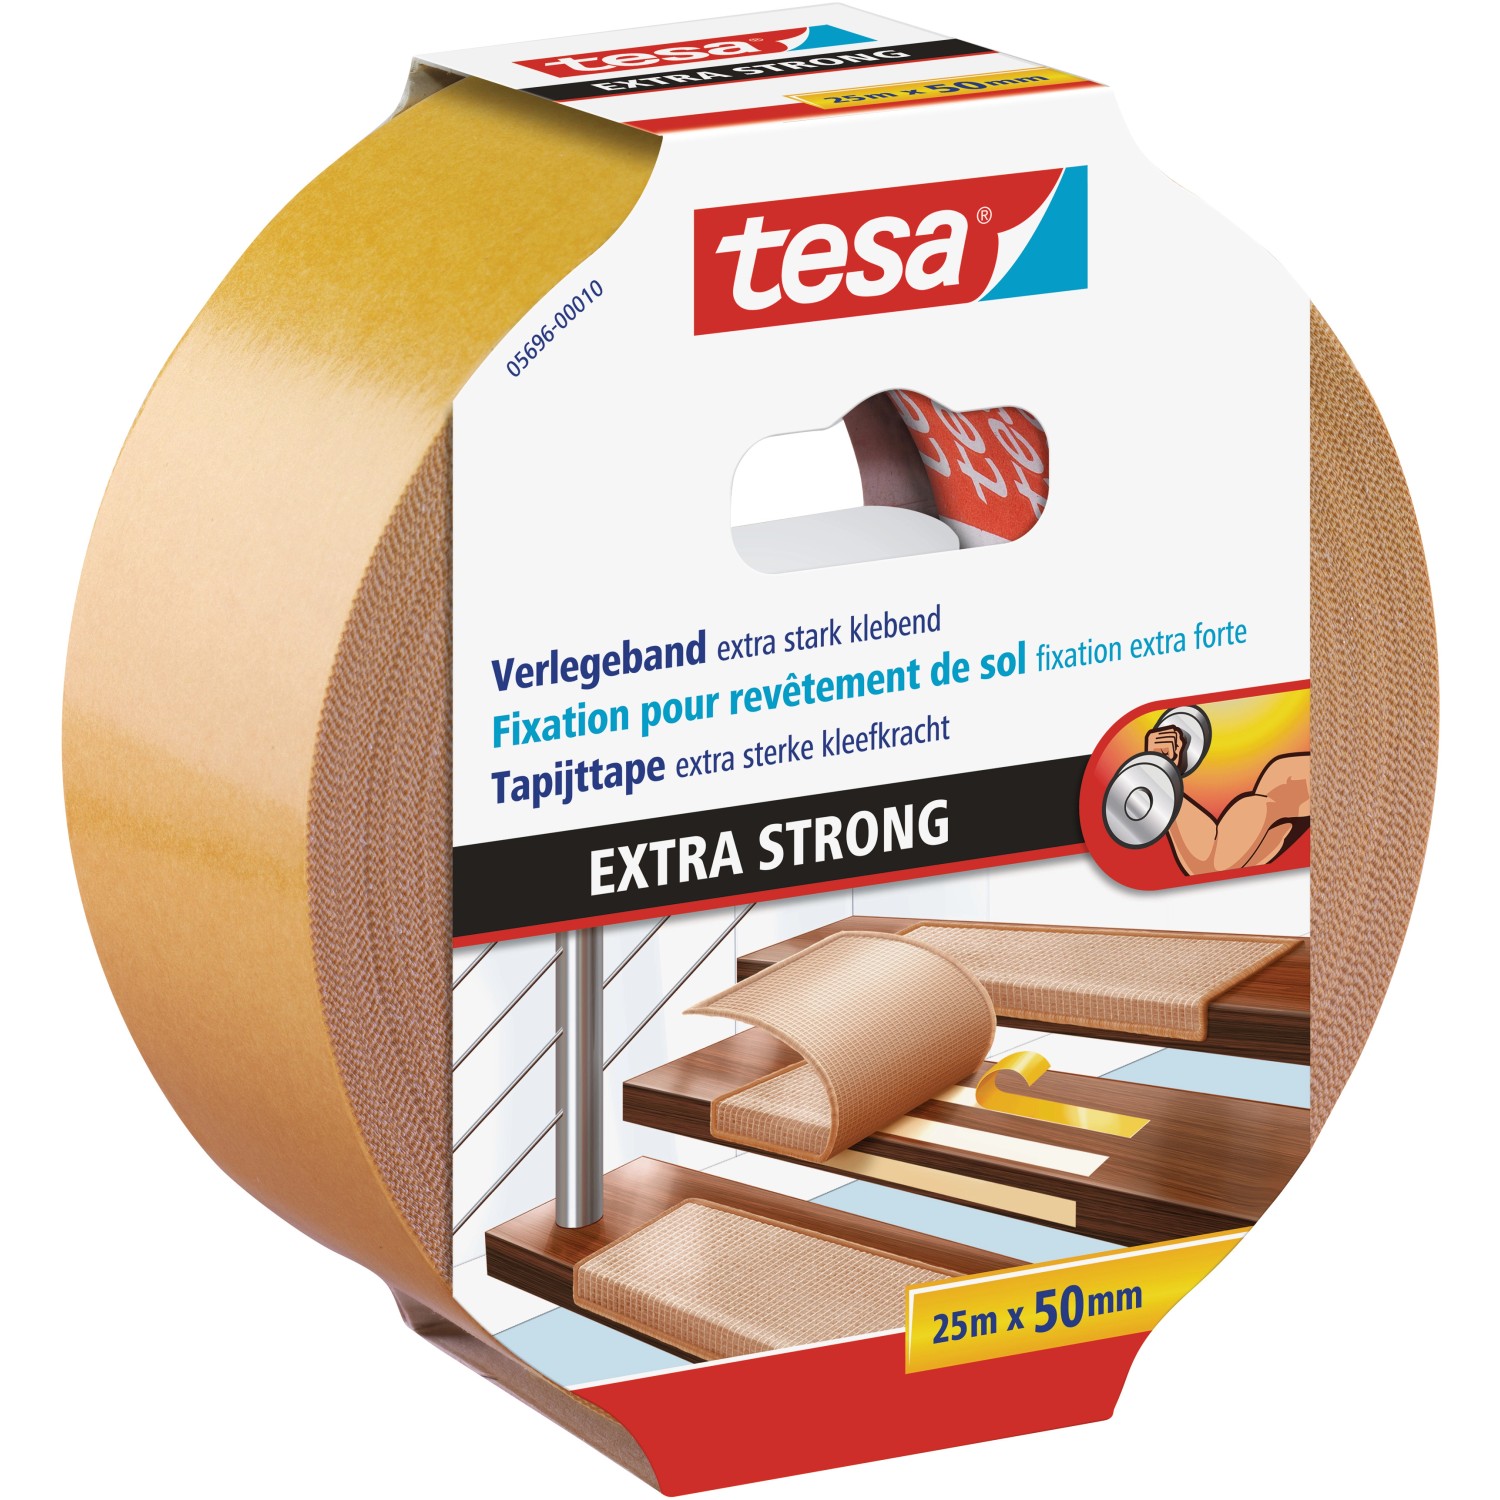 Tesa Verlegeband extra stark klebend 25 m x 50 mm